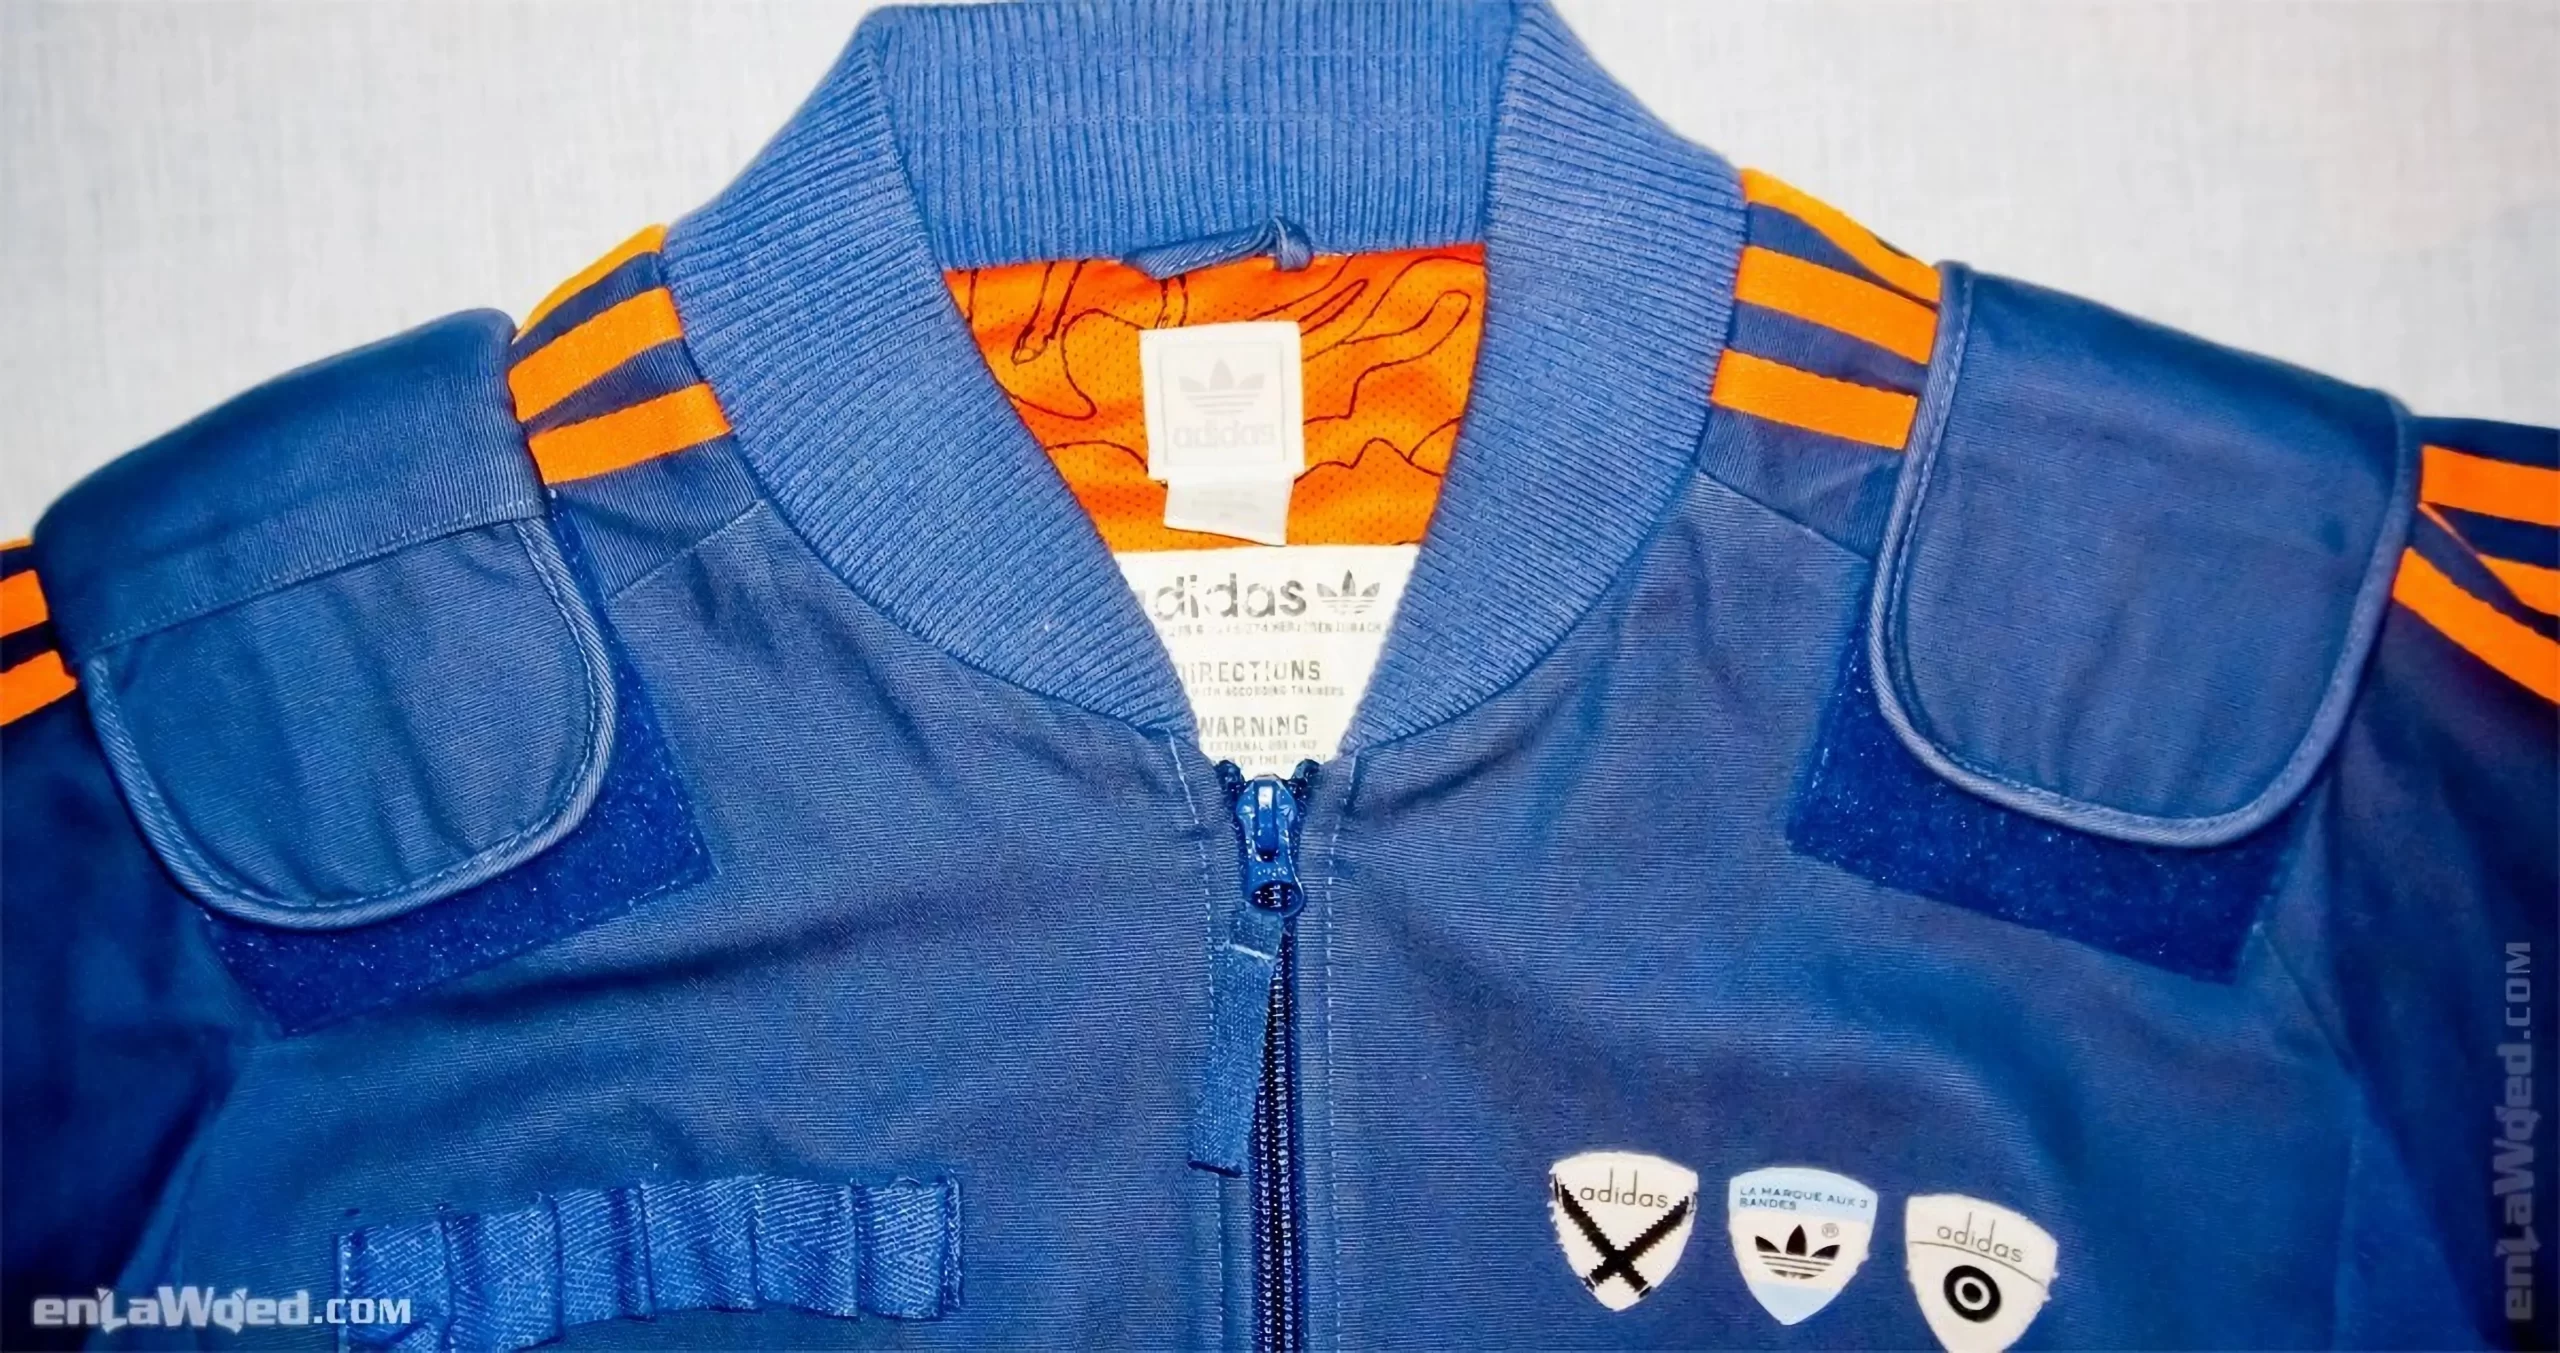 Men’s 2005 Adidas Originals Military Peace Jacket: Unstoppable (EnLawded.com file #lmchbbu0ceszkuh087)